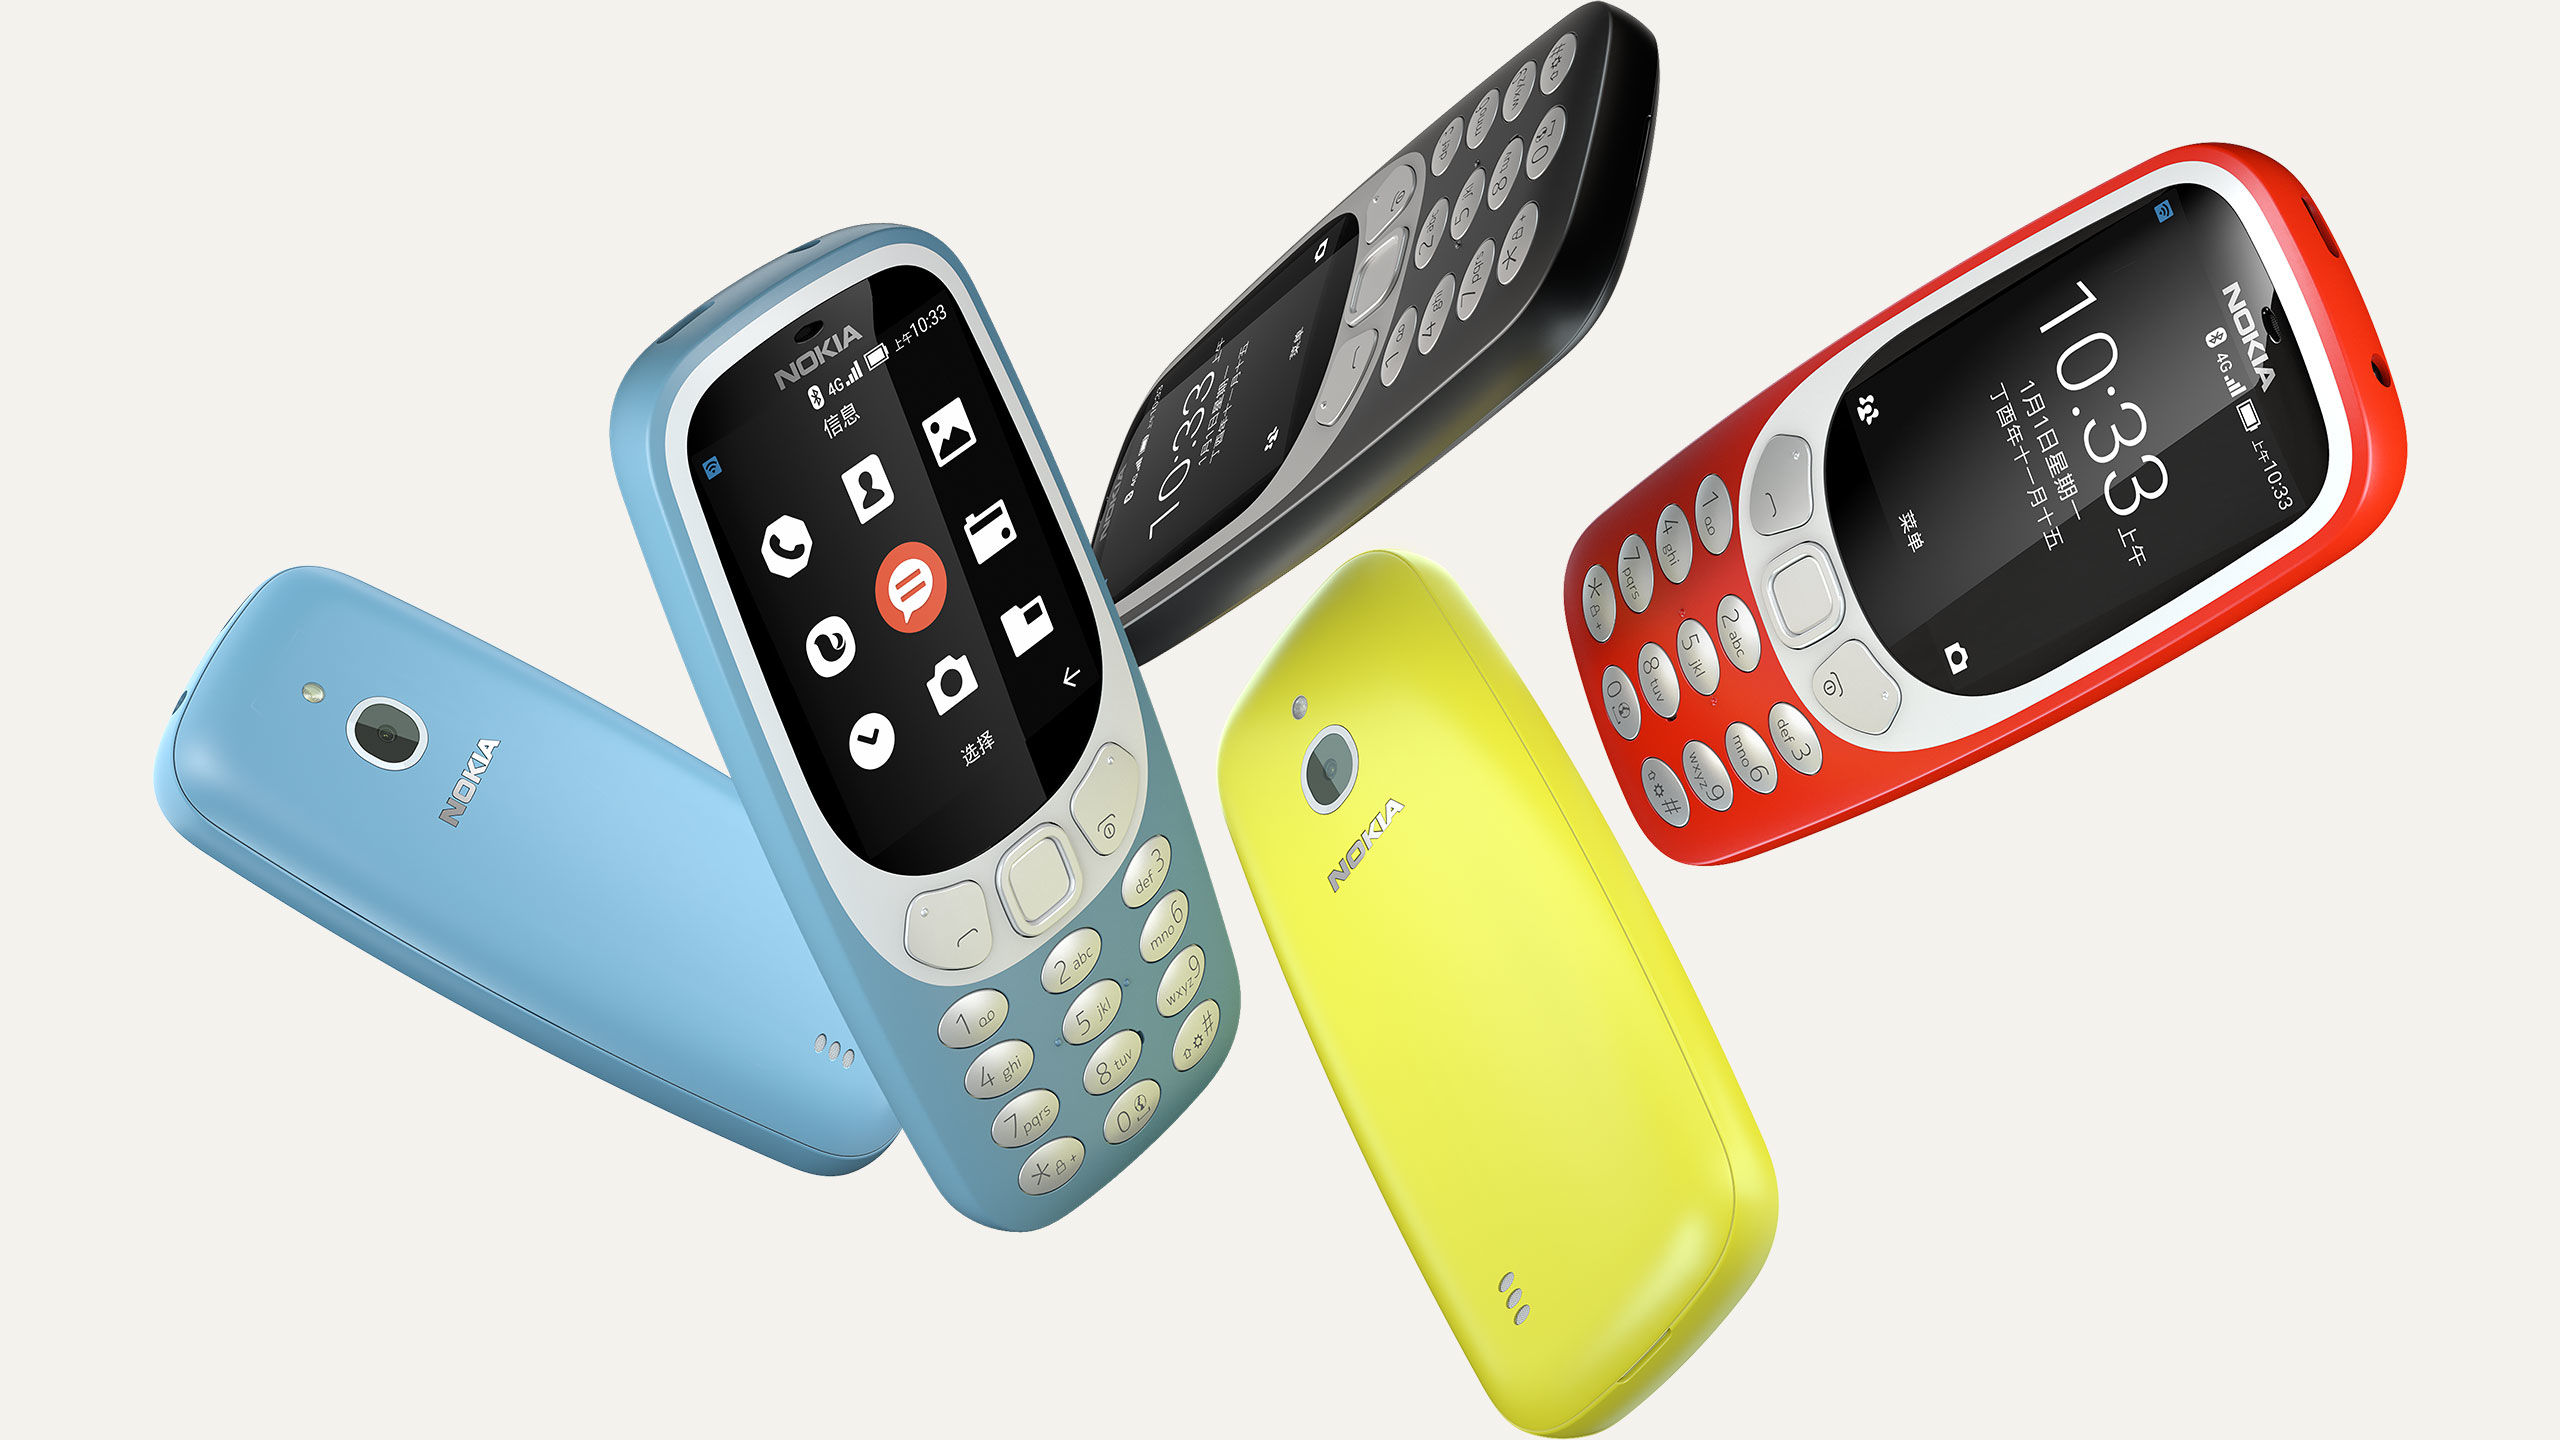 Nokia 3310 4G Das KultHandy kann jetzt LTE handy.de